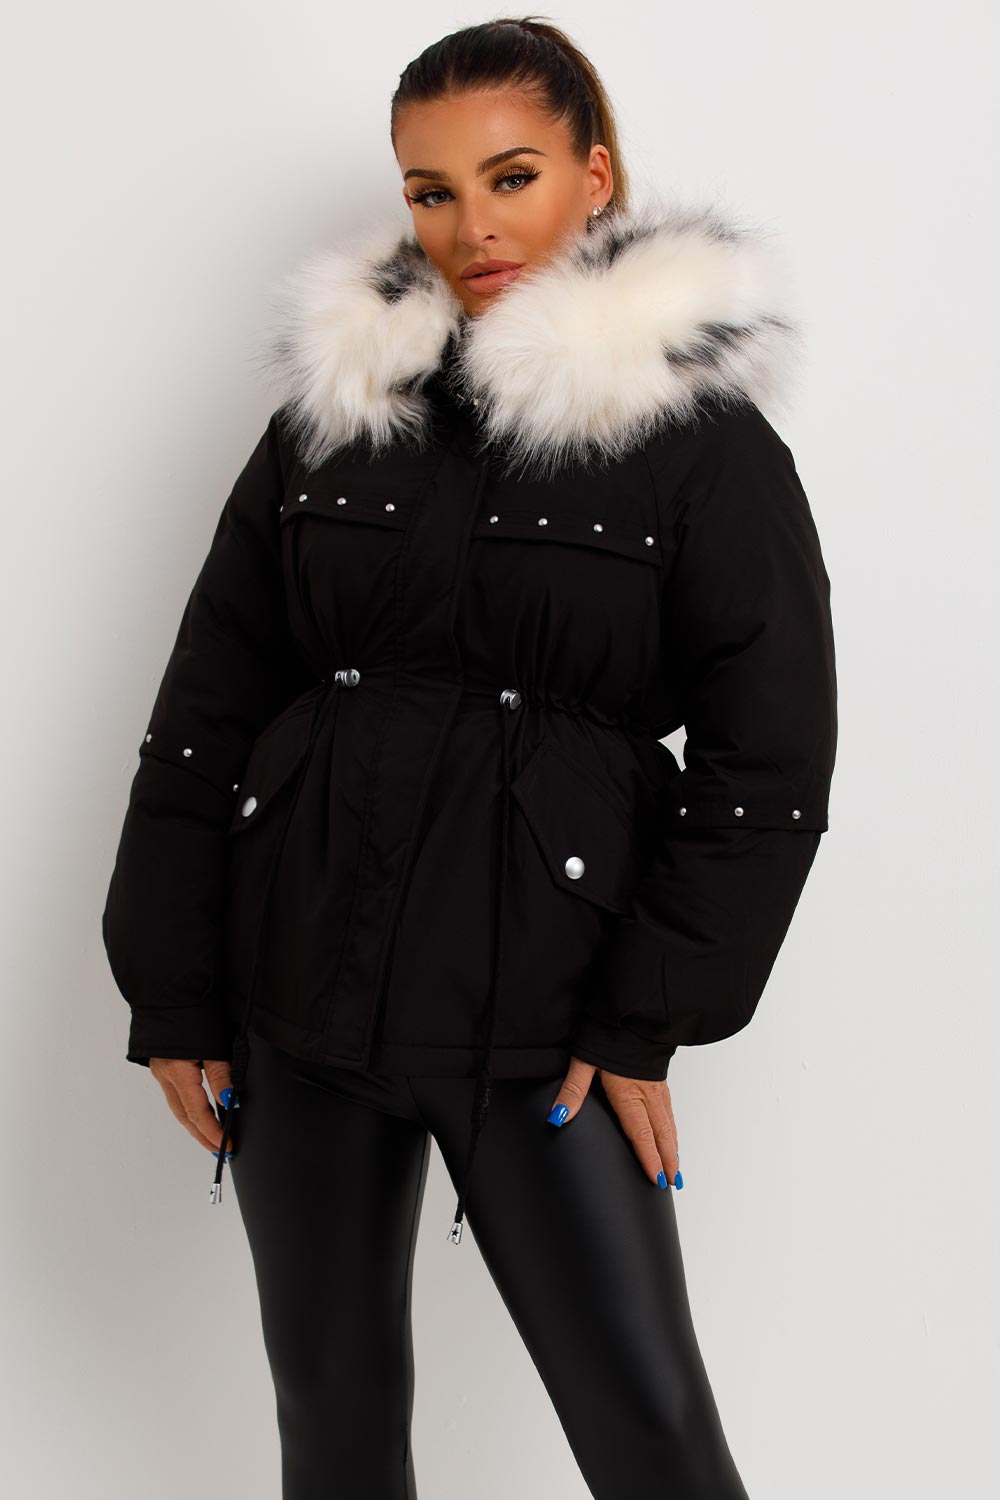 coat with fur hood womens uk